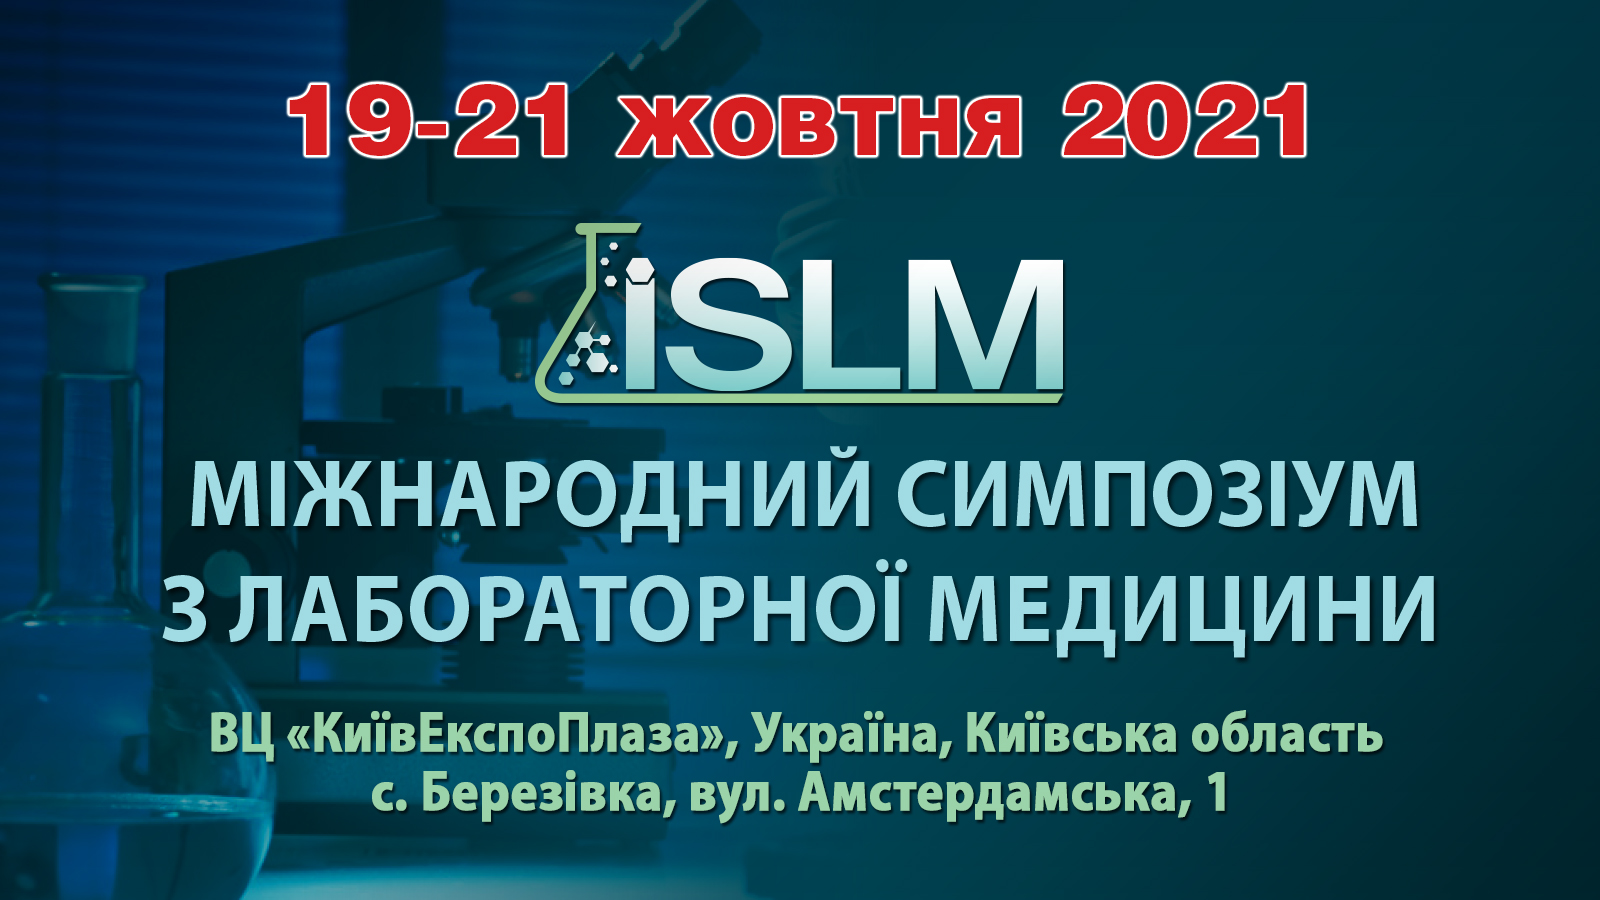 International Symposium on Laboratory Medicine